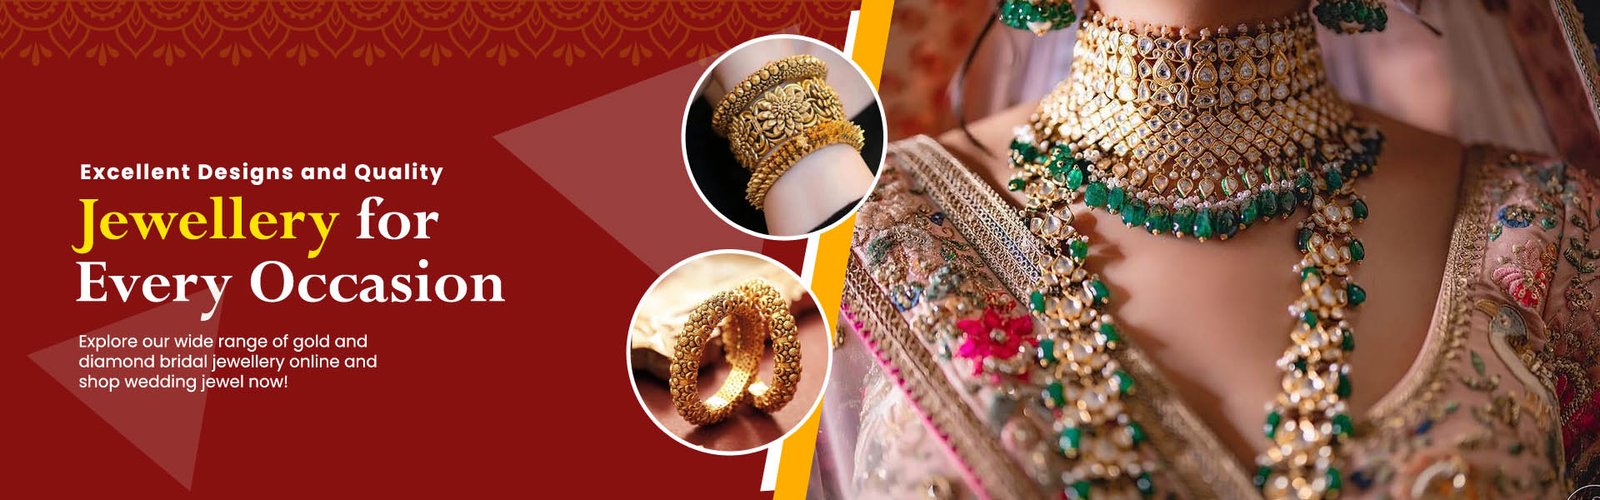 Rajputi Jewellery Online, Buy Rajputi jewelry online at best price